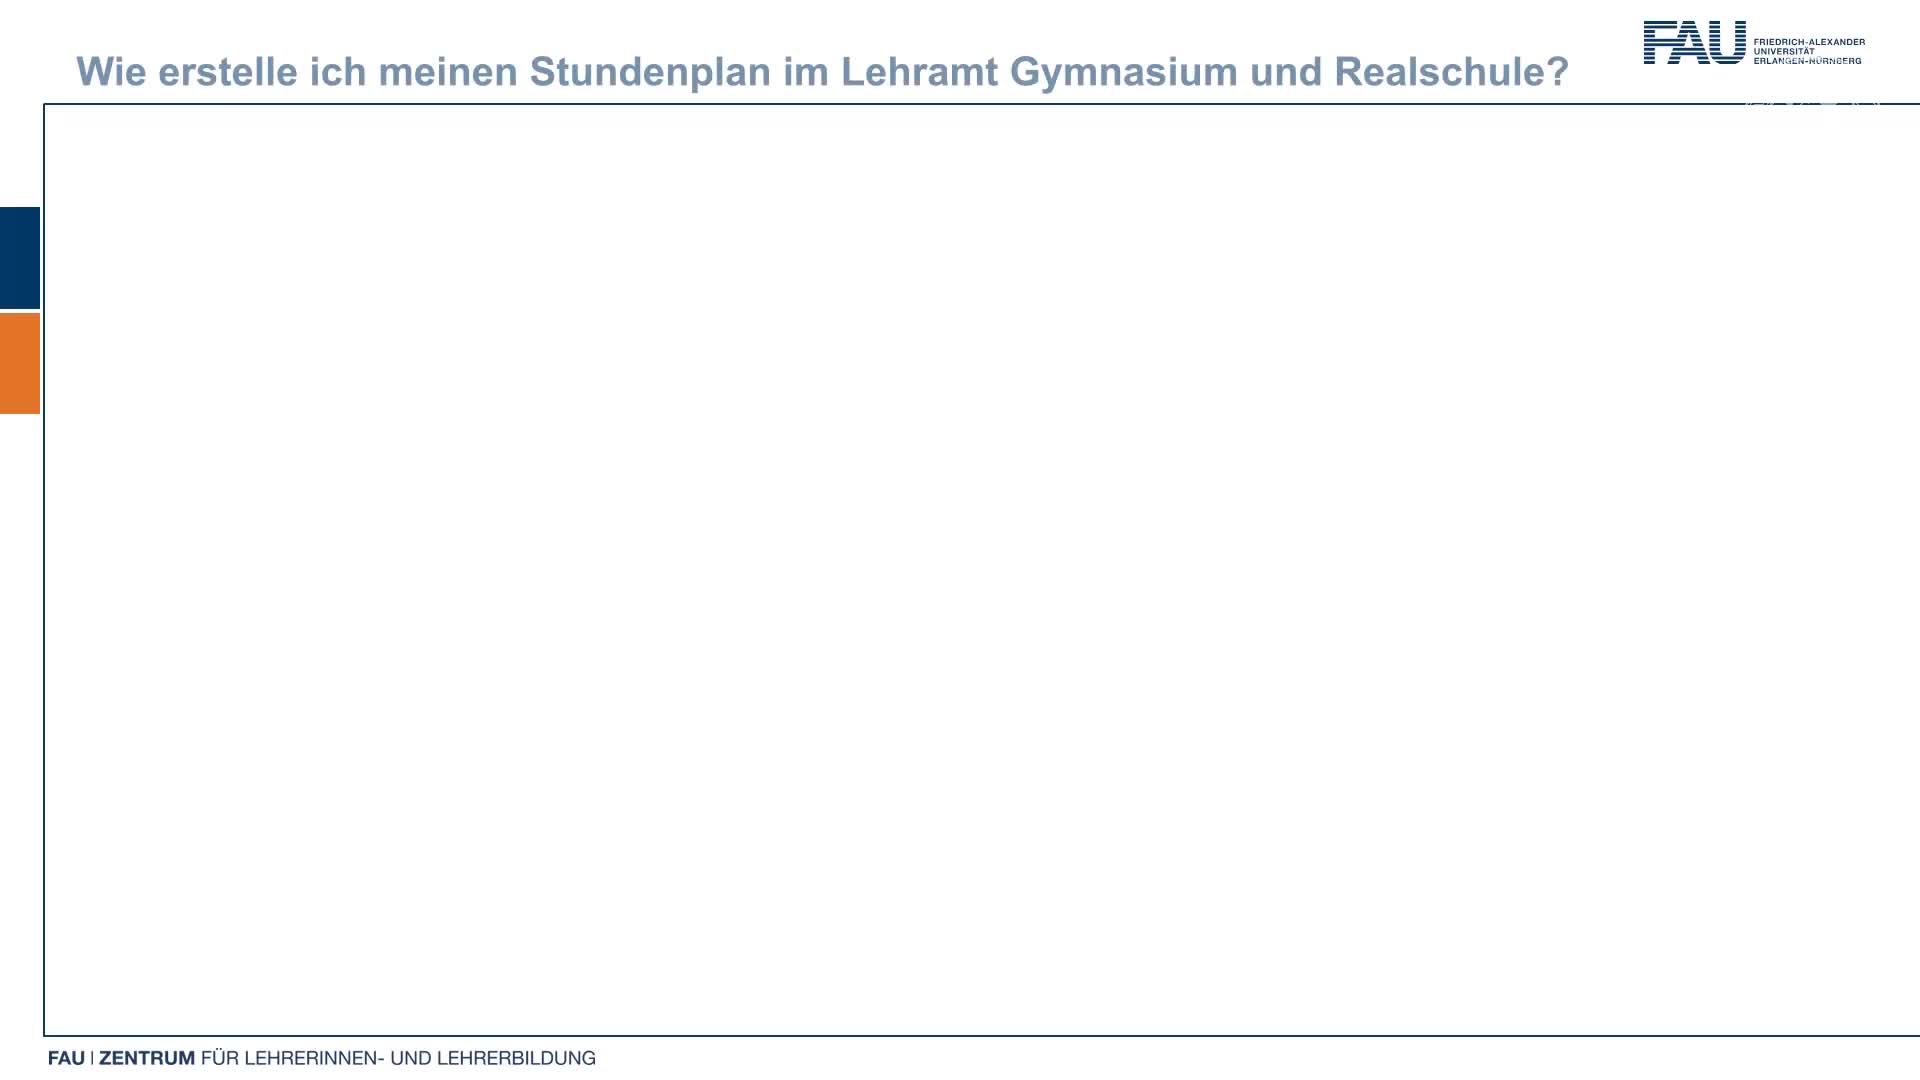 Lehramt | Gymnasium | Realschule | Stundenplan III | ZfL preview image